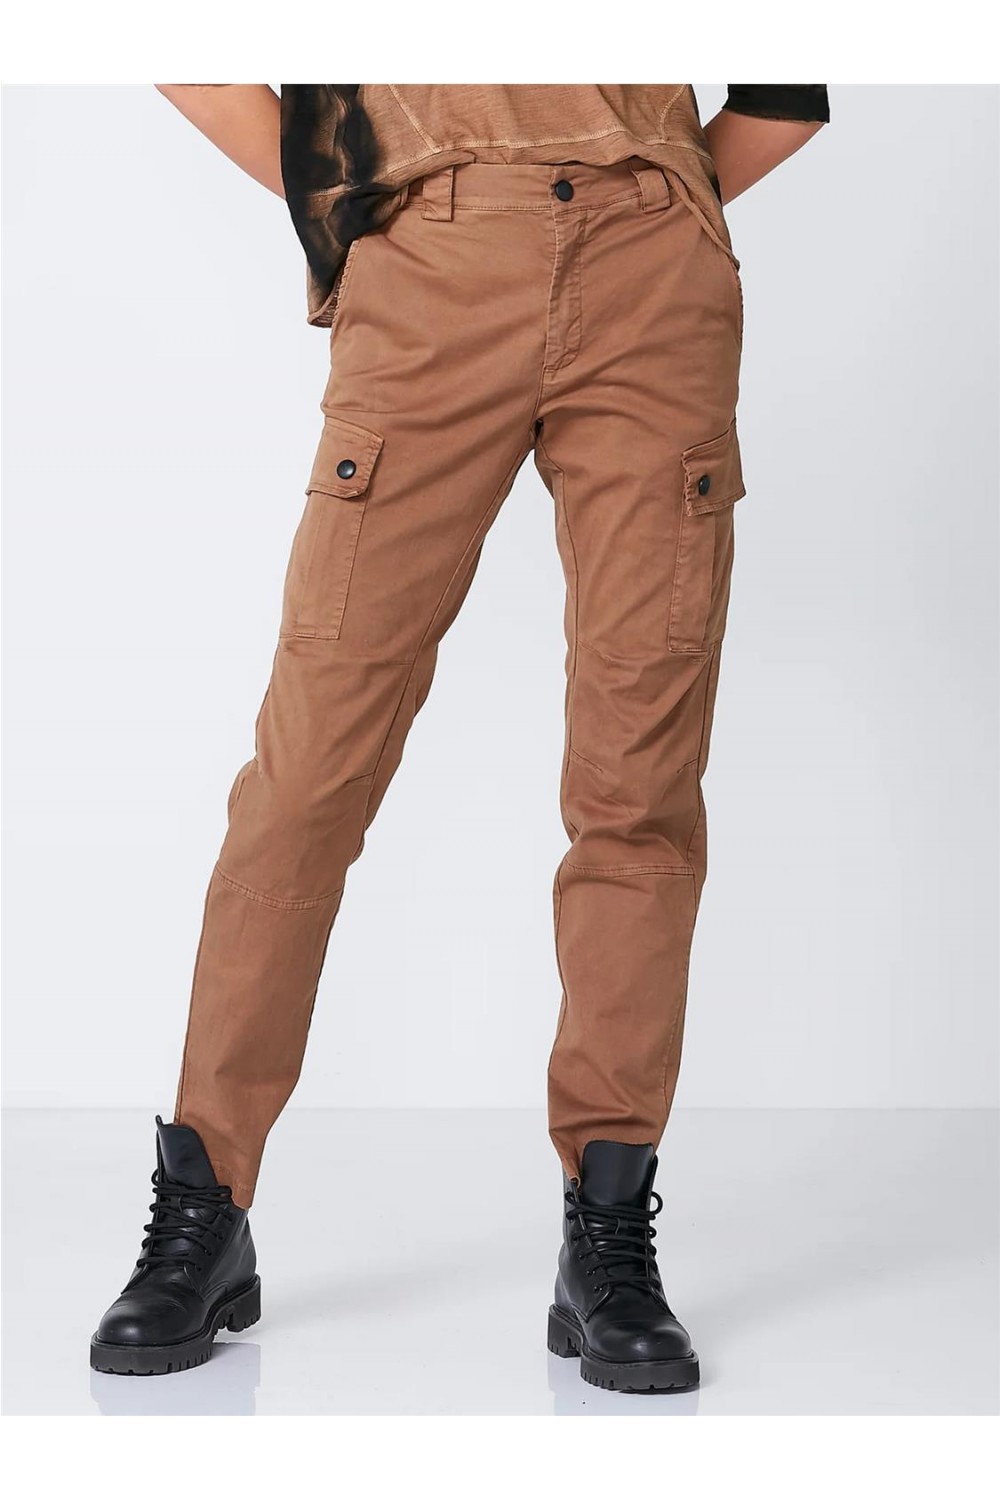  Pantalones para mujer – Pantalones cargo con bolsillo lateral  con solapa (color verde militar, talla: S) : Ropa, Zapatos y Joyería